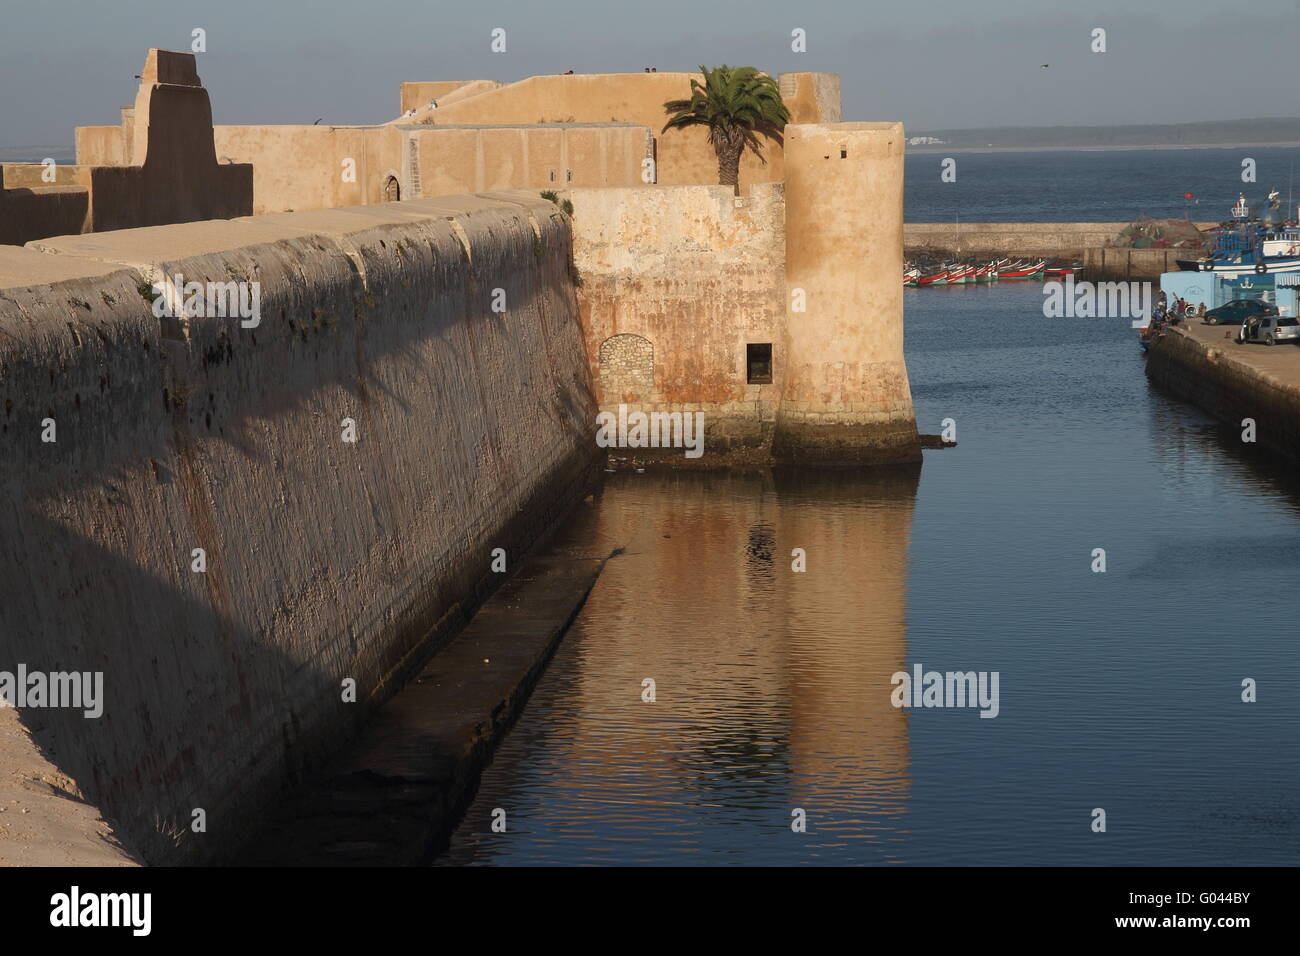 Mur de la ville de la ville fortifiée portugaise de Mazagan. El-Jadida Banque D'Images